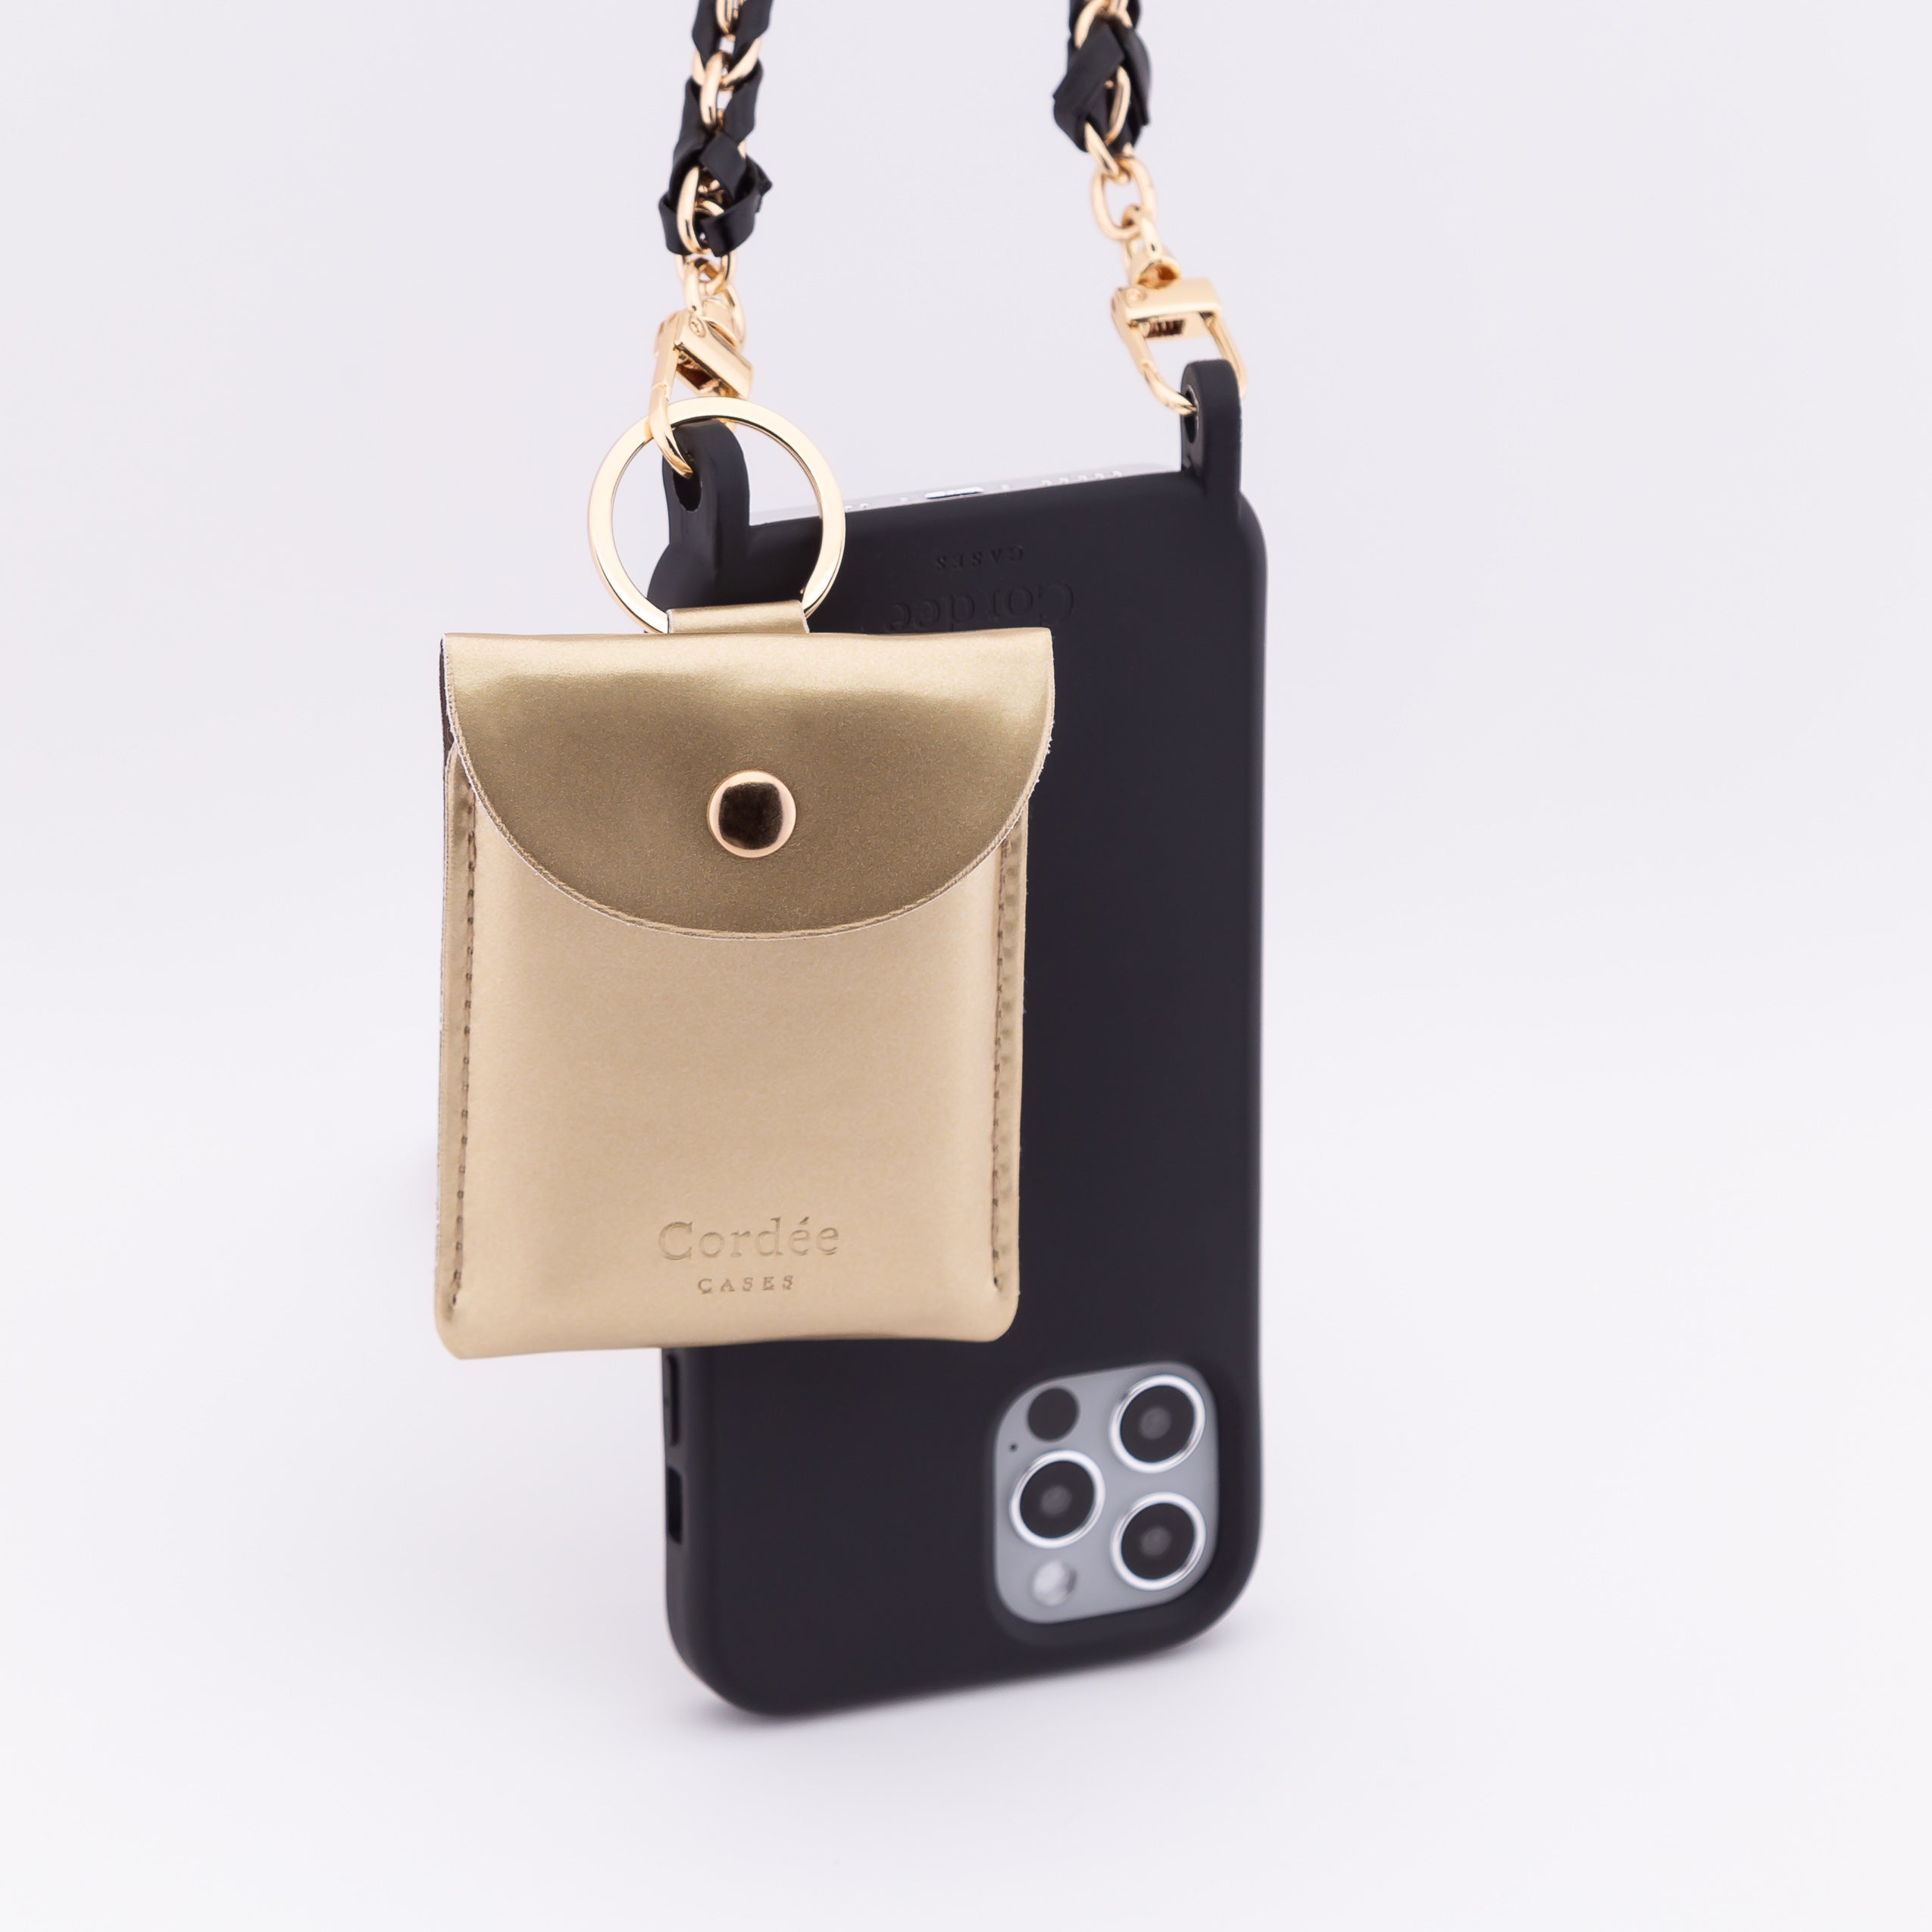 Mini Wallet Gold - Cordée Cases